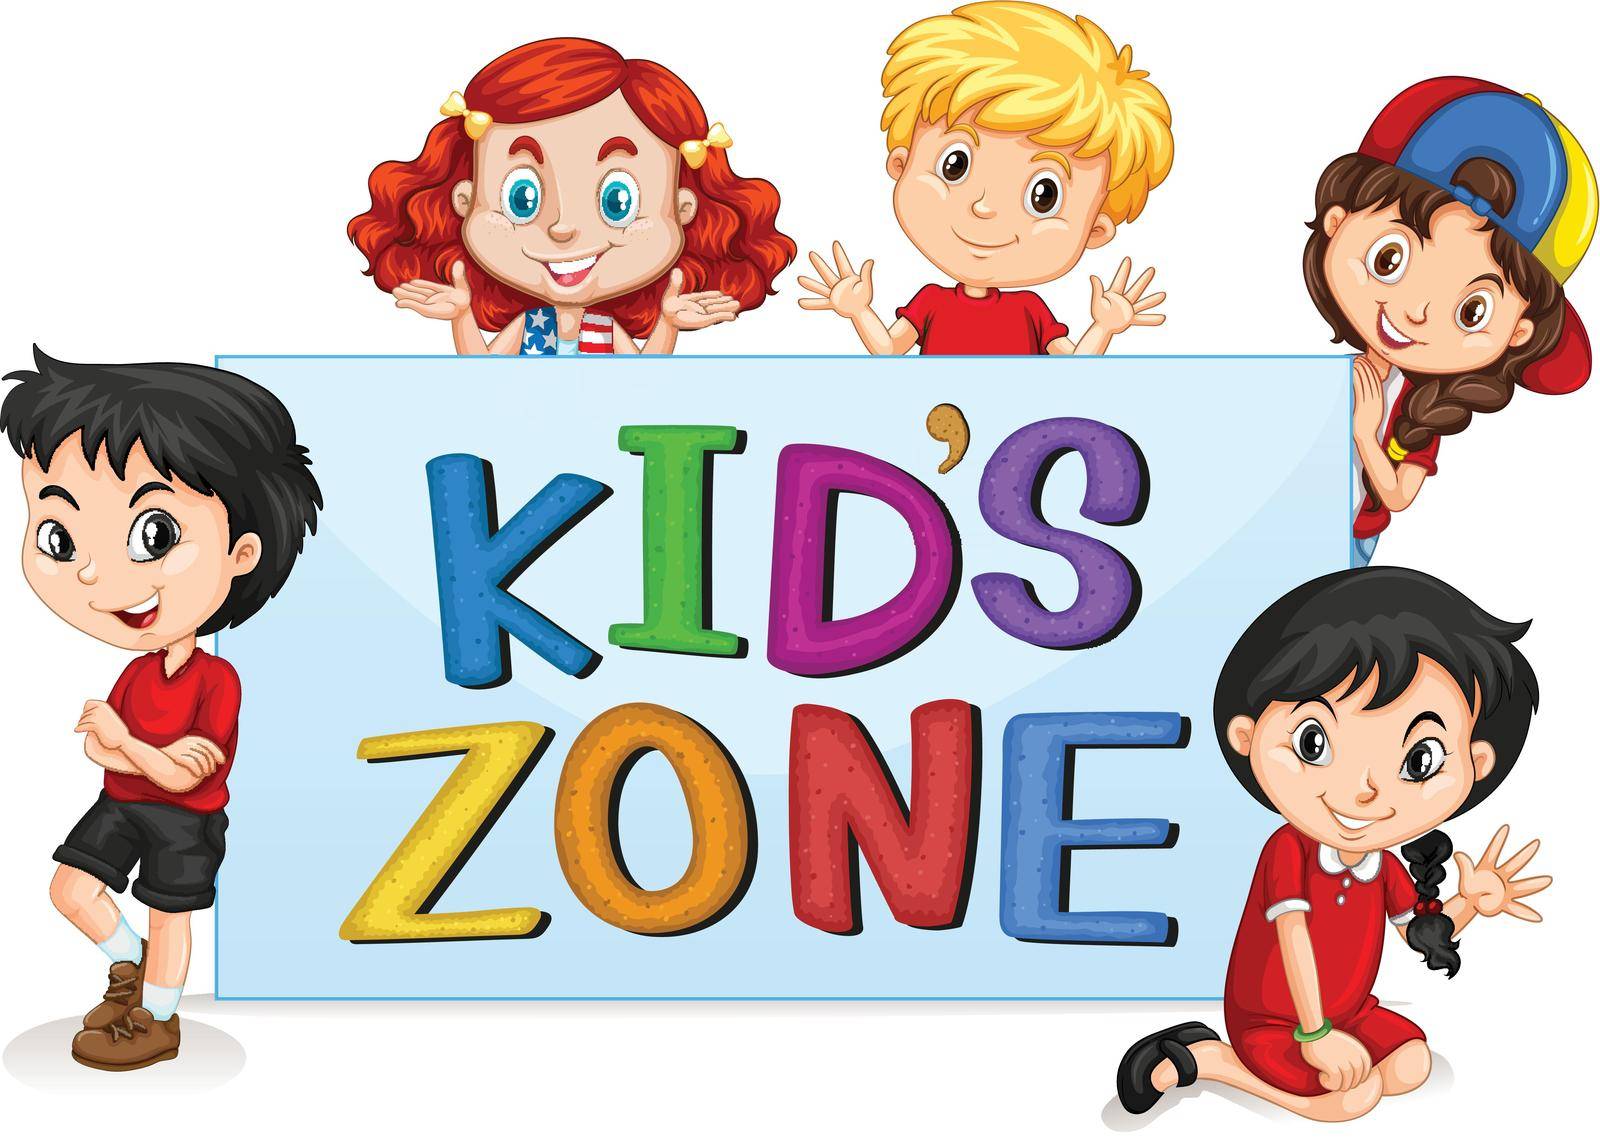 Kid's zone with international kids illustration